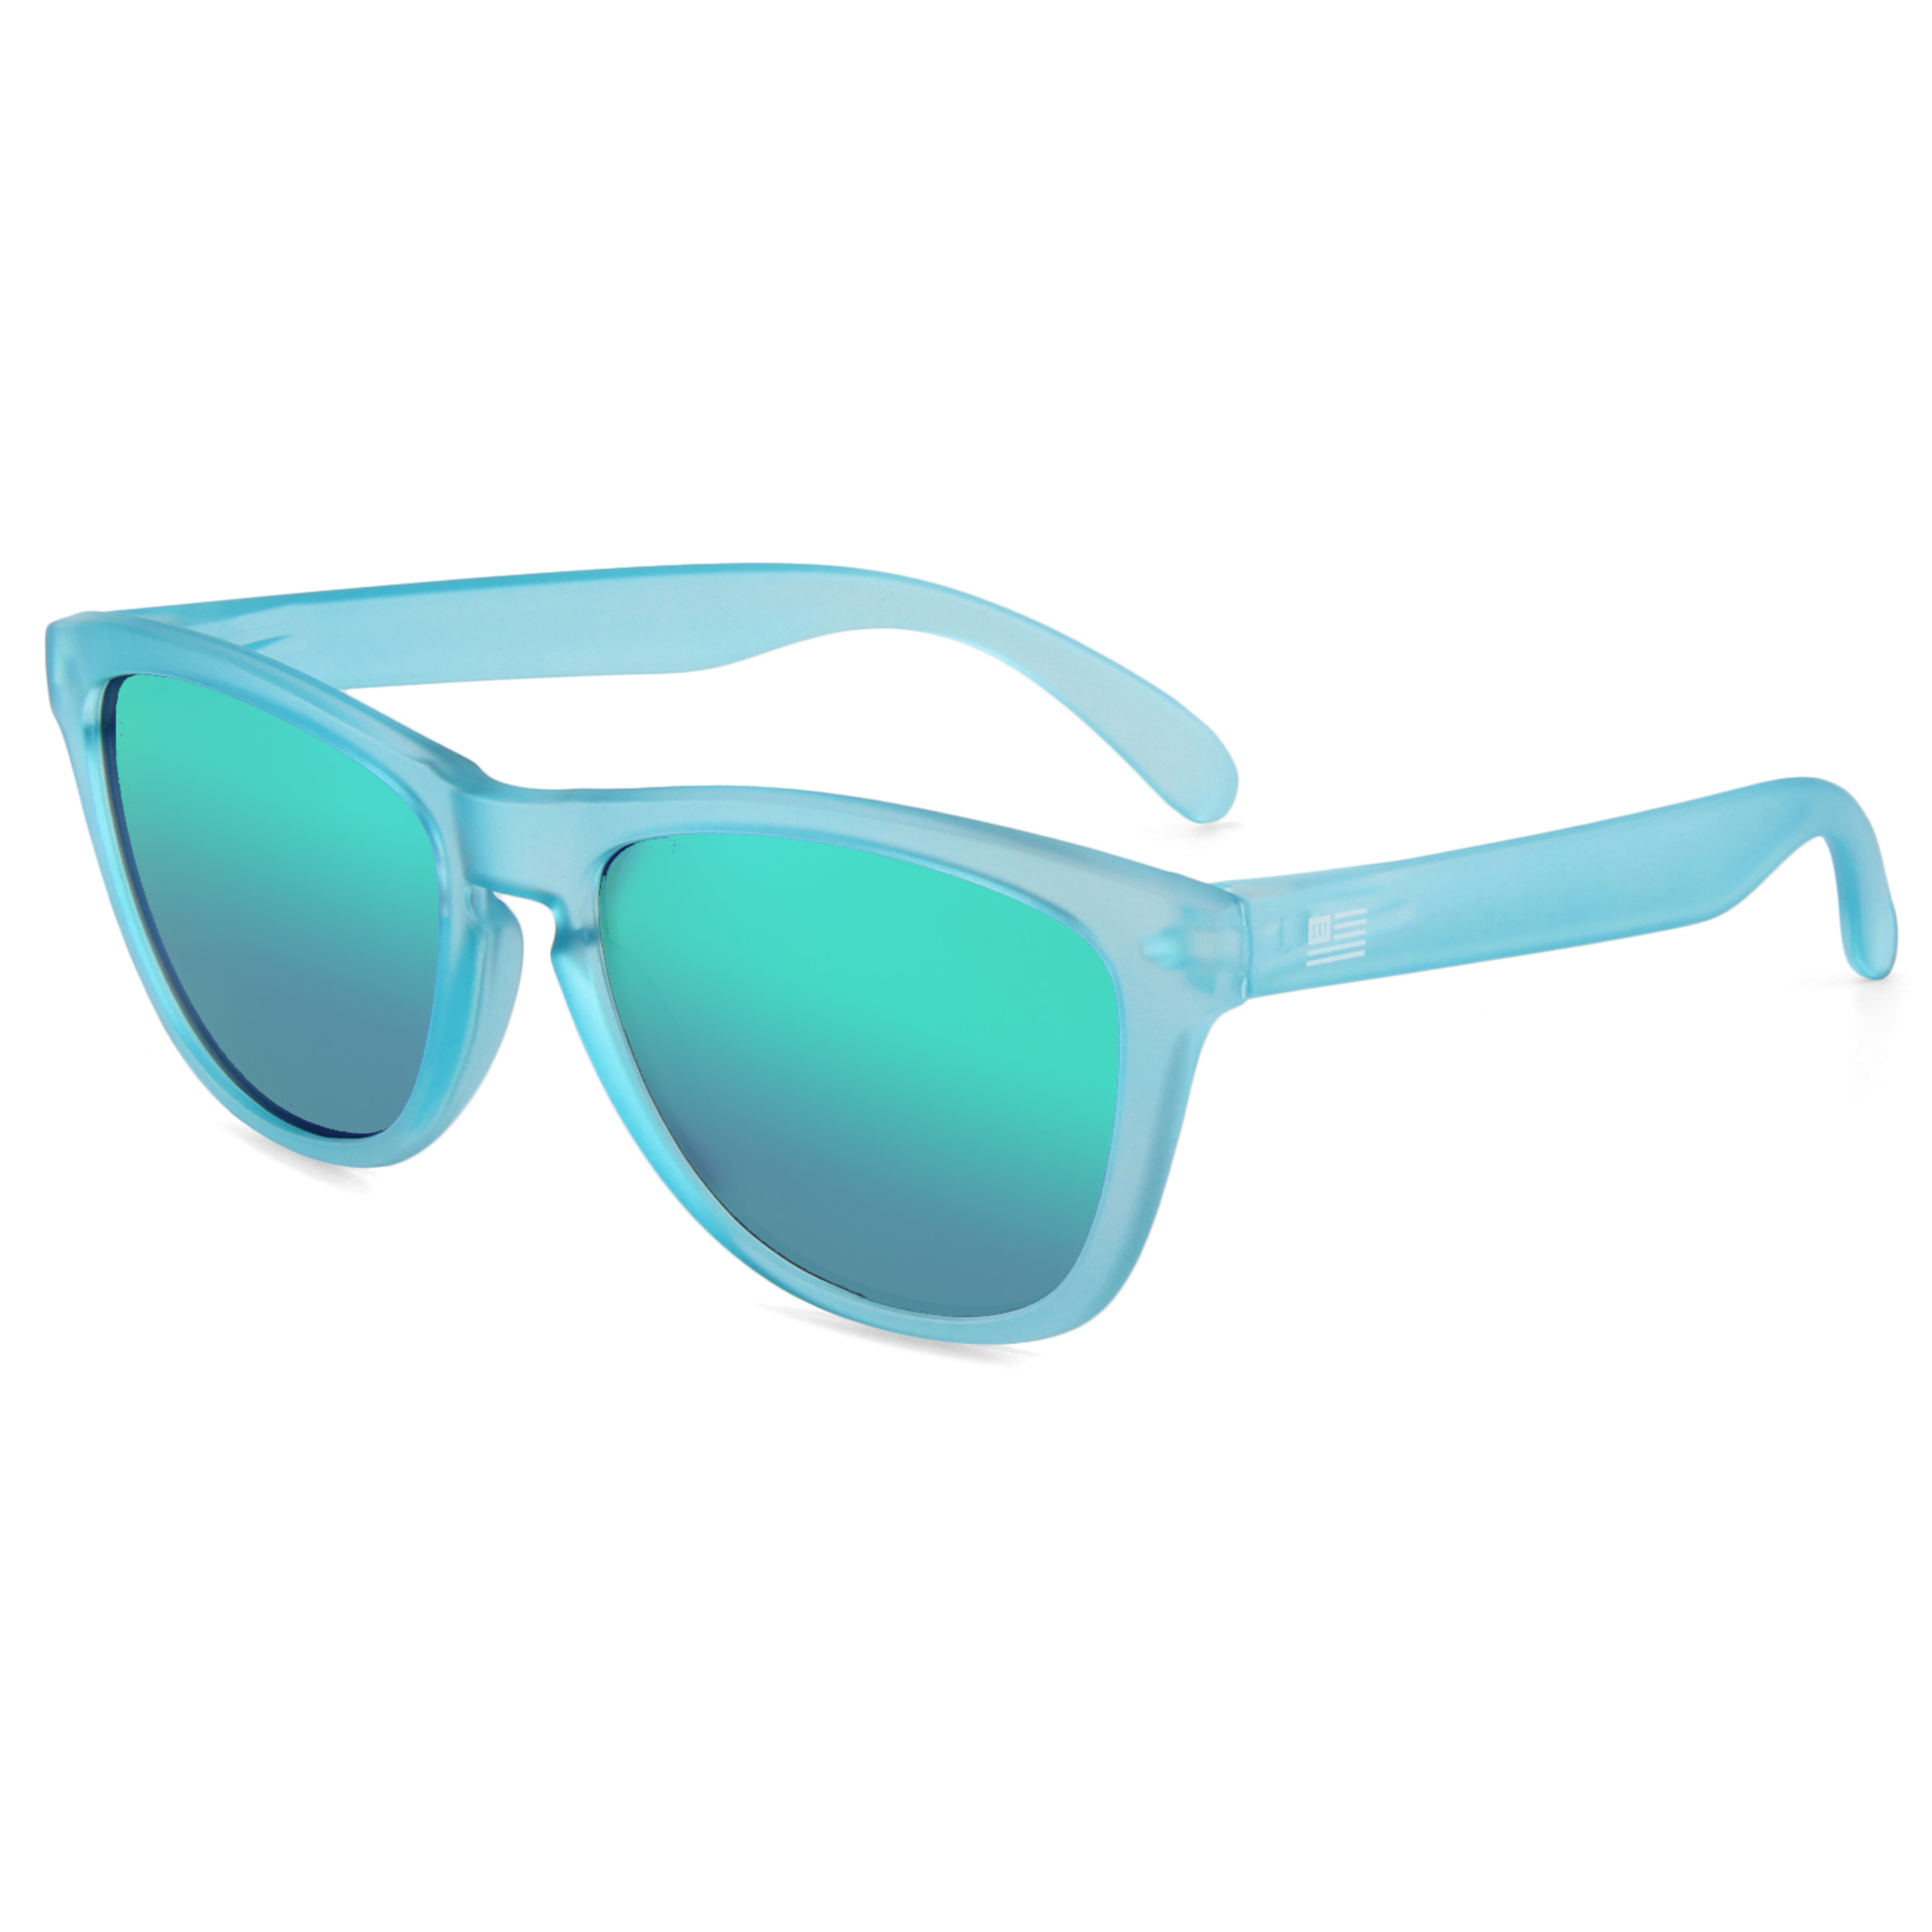 Gafas De Sol Sexton Original - Azul Aqua - Cuadrada  MKP